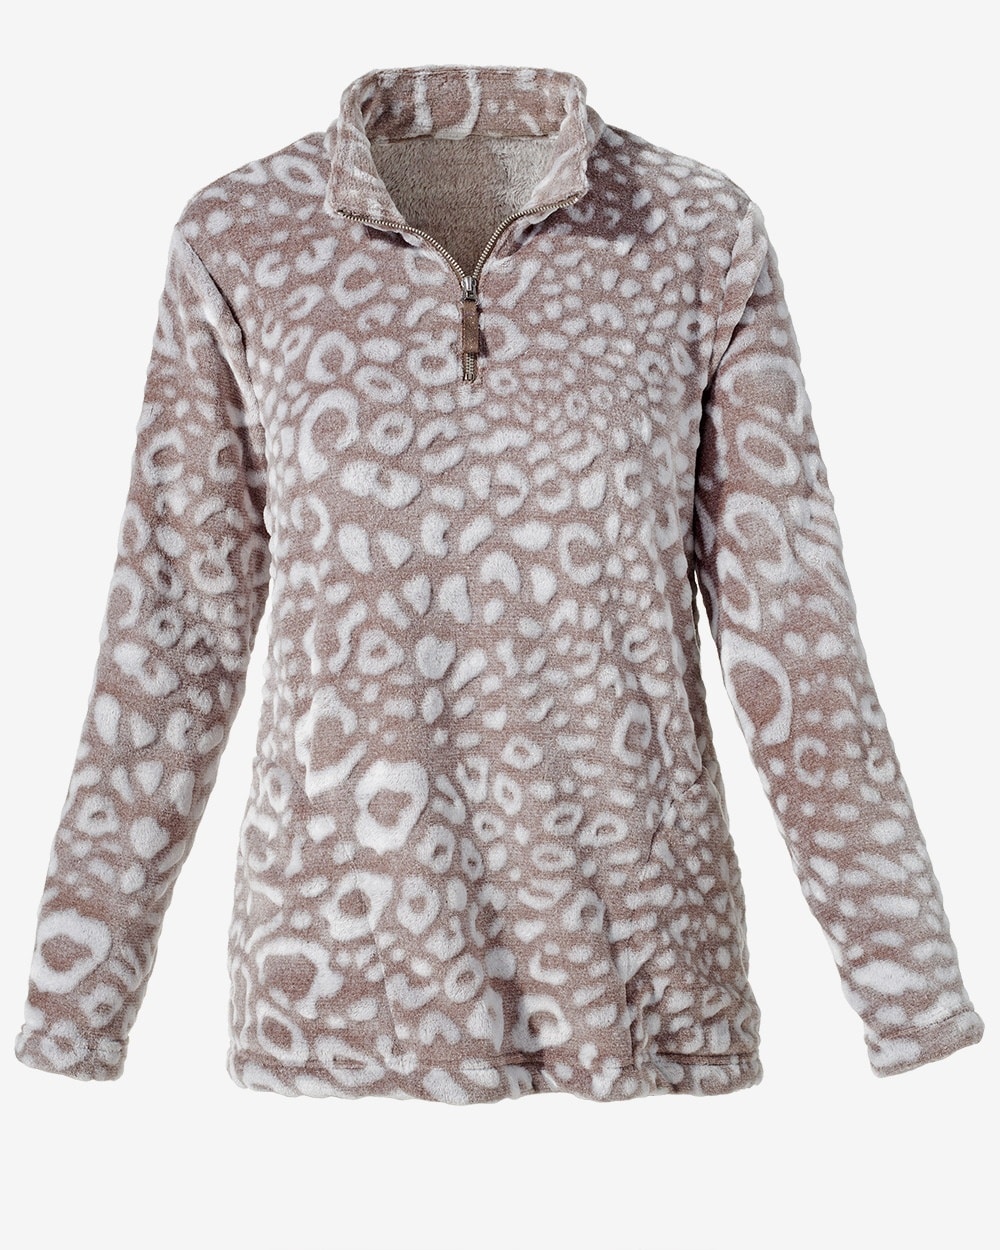 Weekends CoziSoft Cheetah Plush Pullover